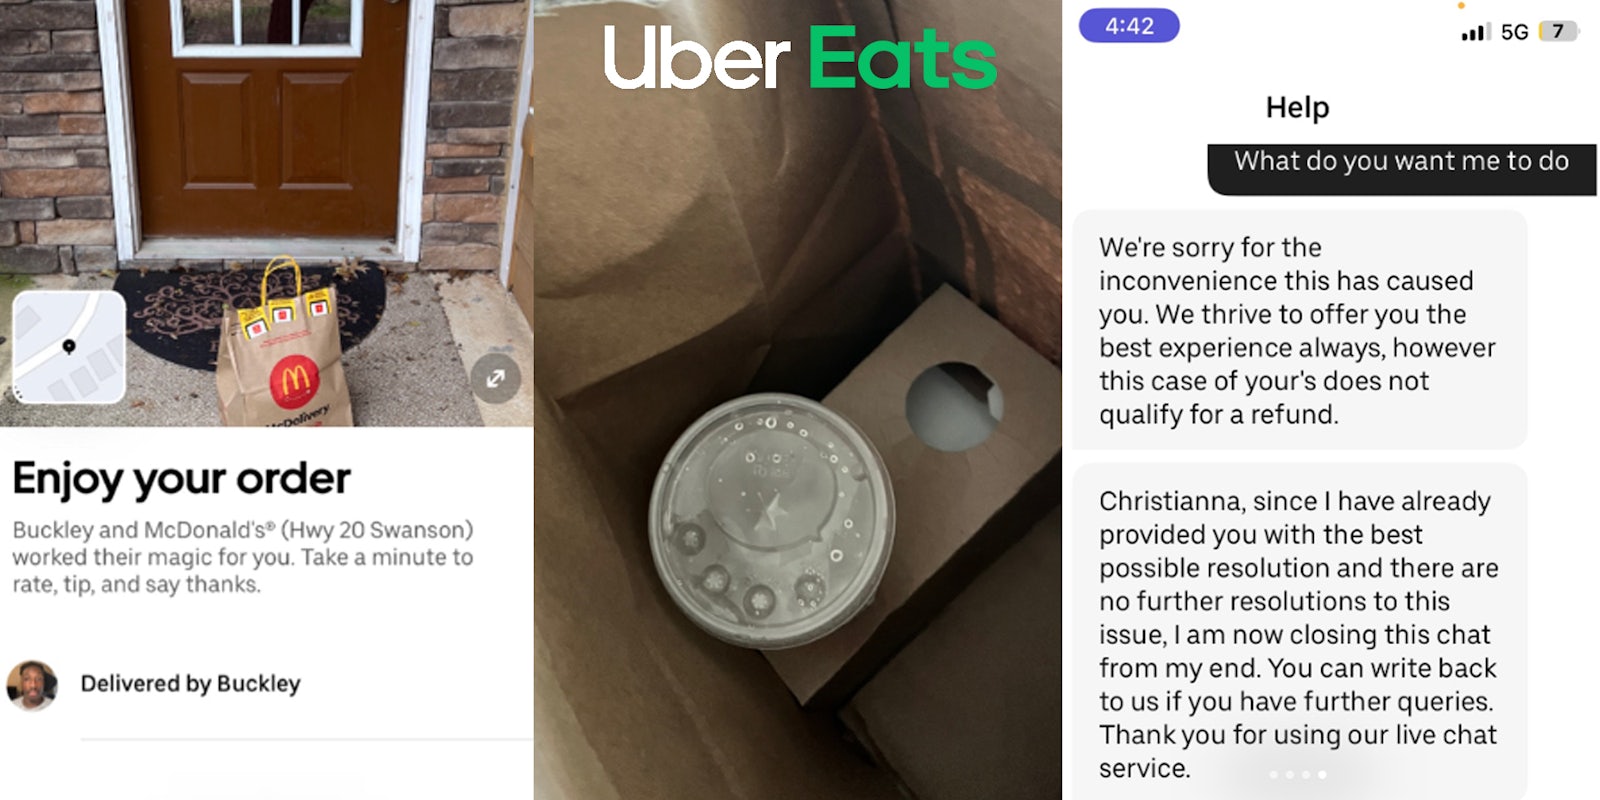 Uber Eats order with image of bag delivered at front door (l) only Sprite inside McDonald's bag with Uber Eats logo at the top (c) Uber Eats customer service chat denying refund (r)